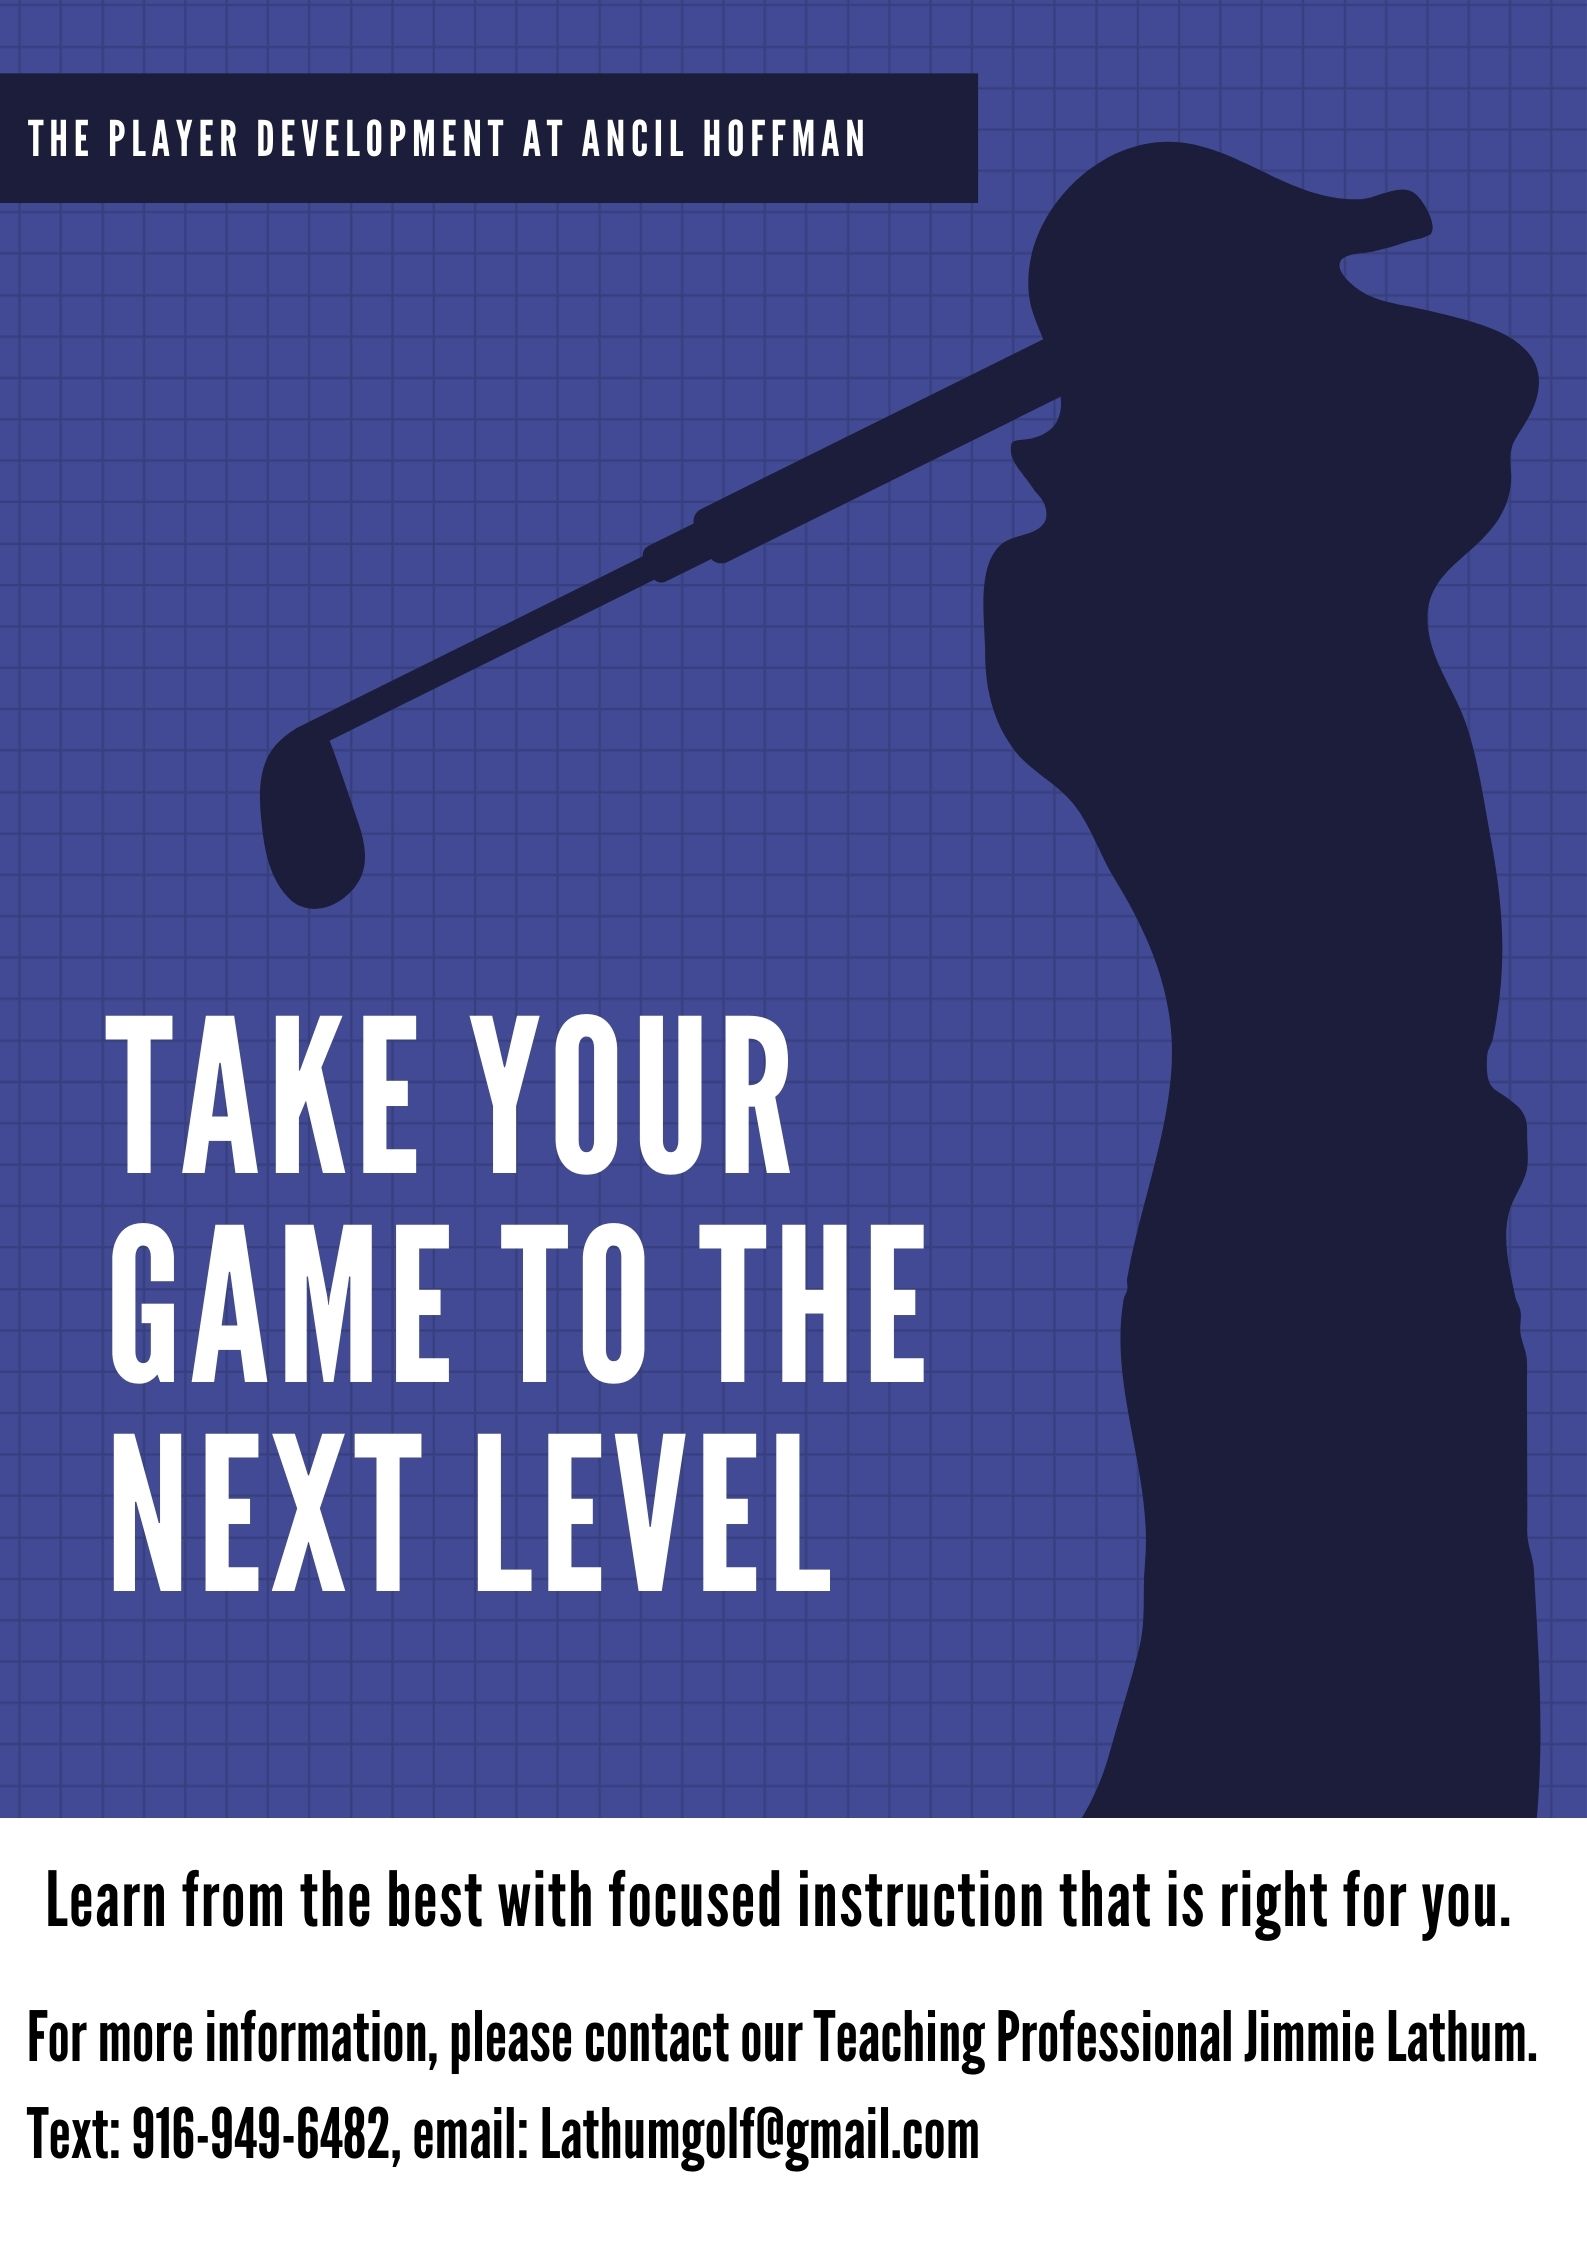 Generic Golf Instruc Image flyer Final